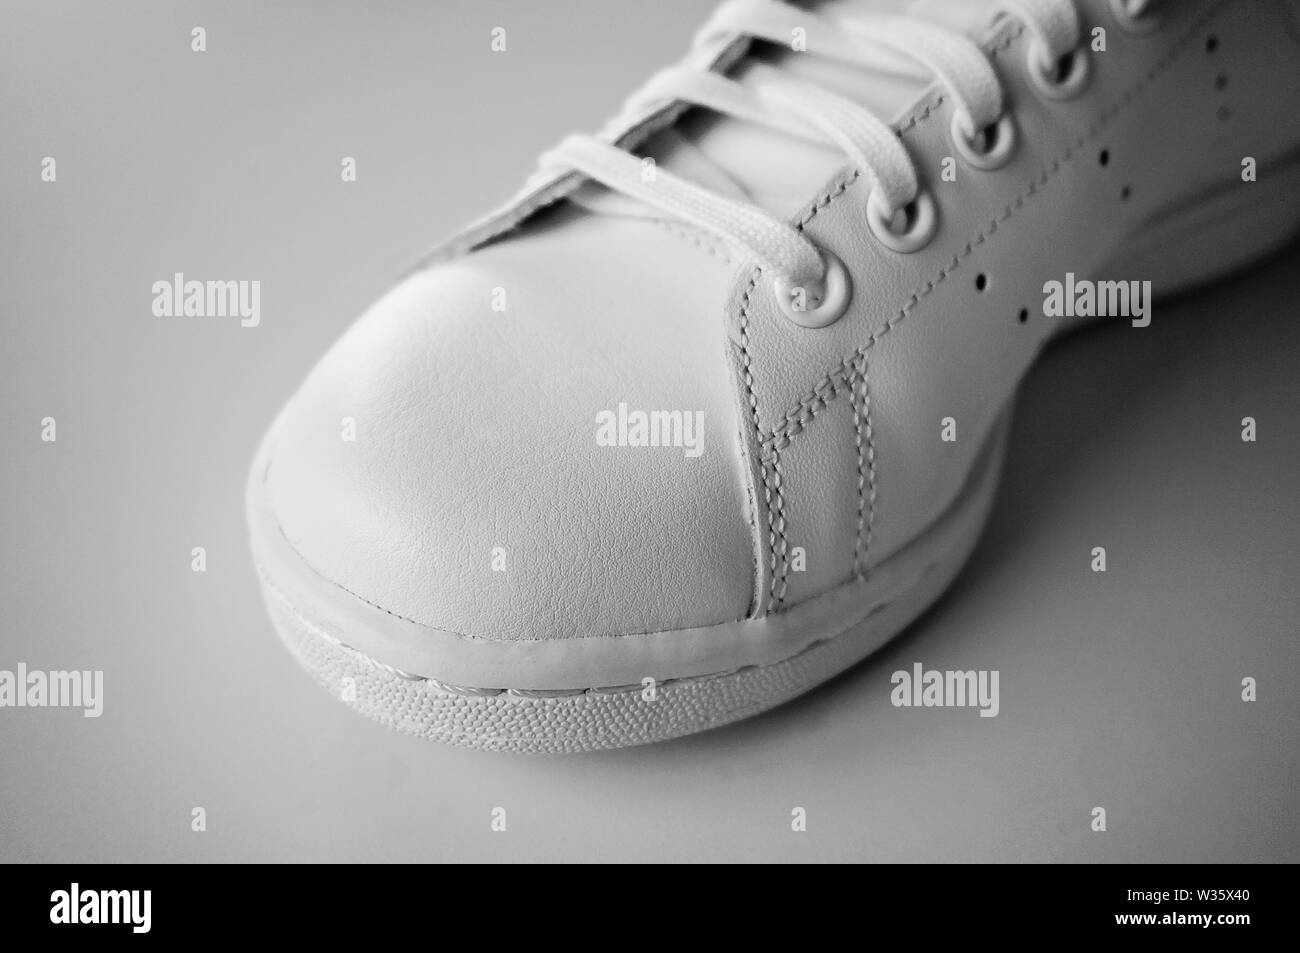 White sport shoe detail close up Stock Photo